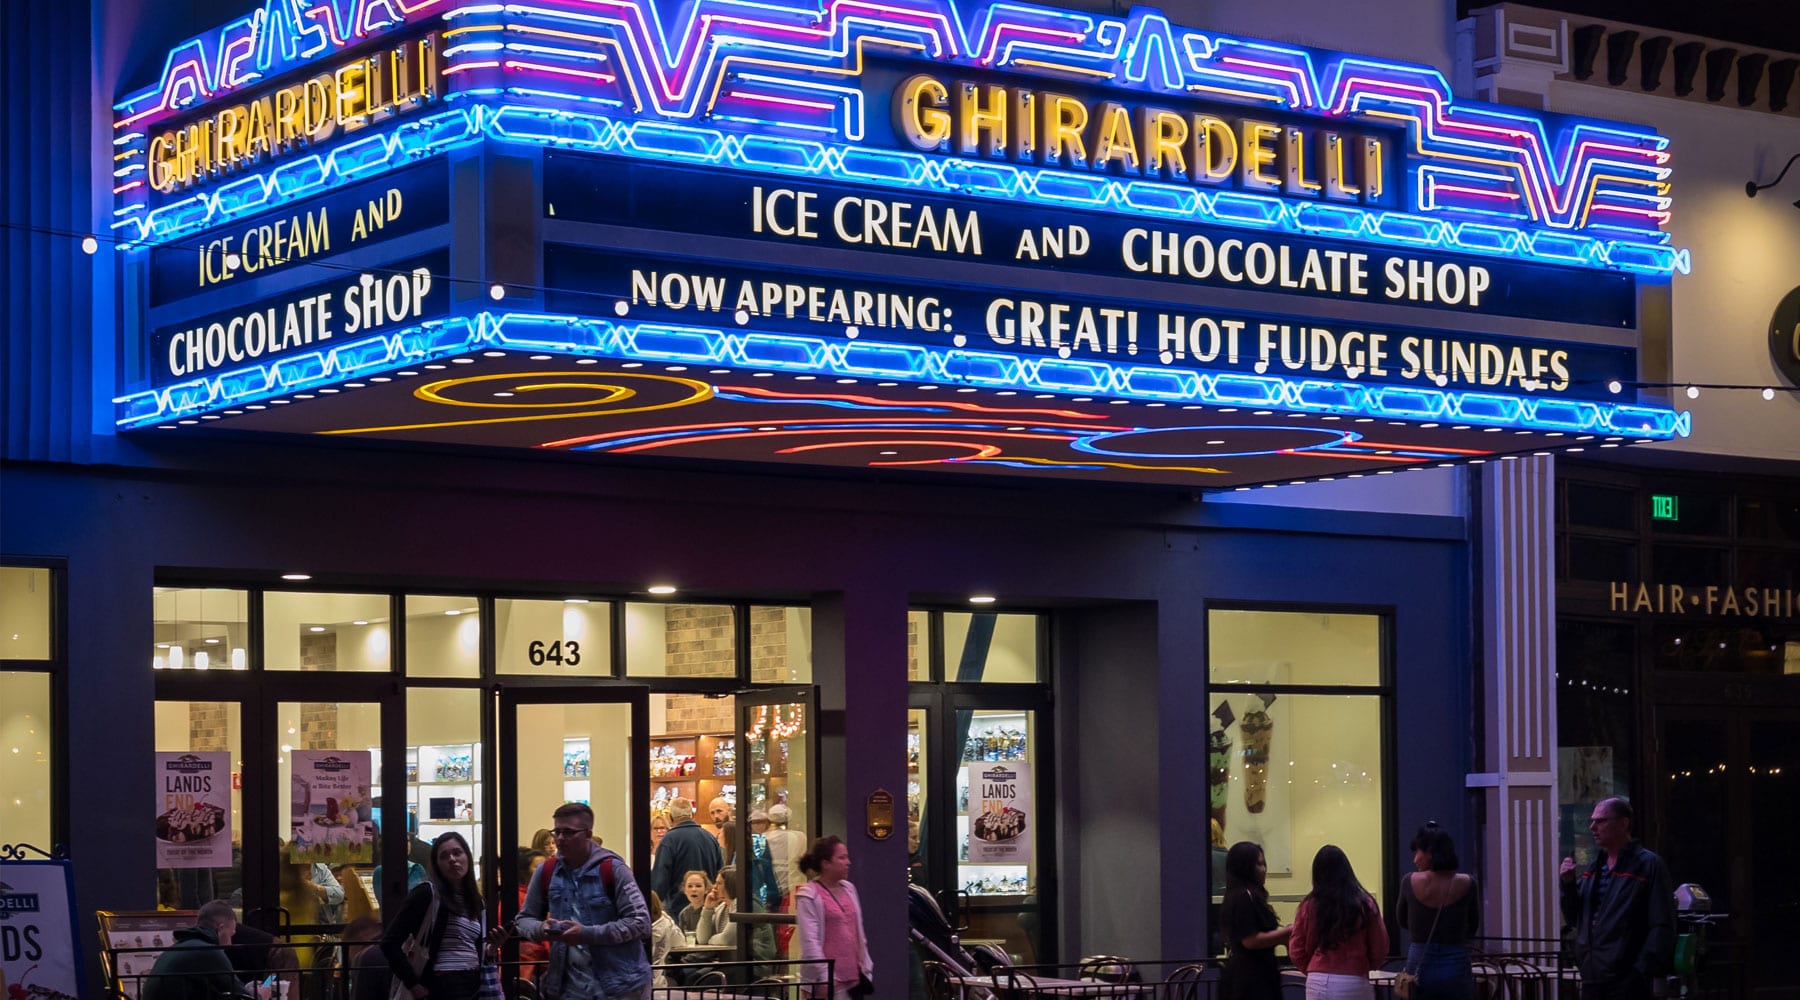 Ghirardelli Ice Cream and Chocolate Shop